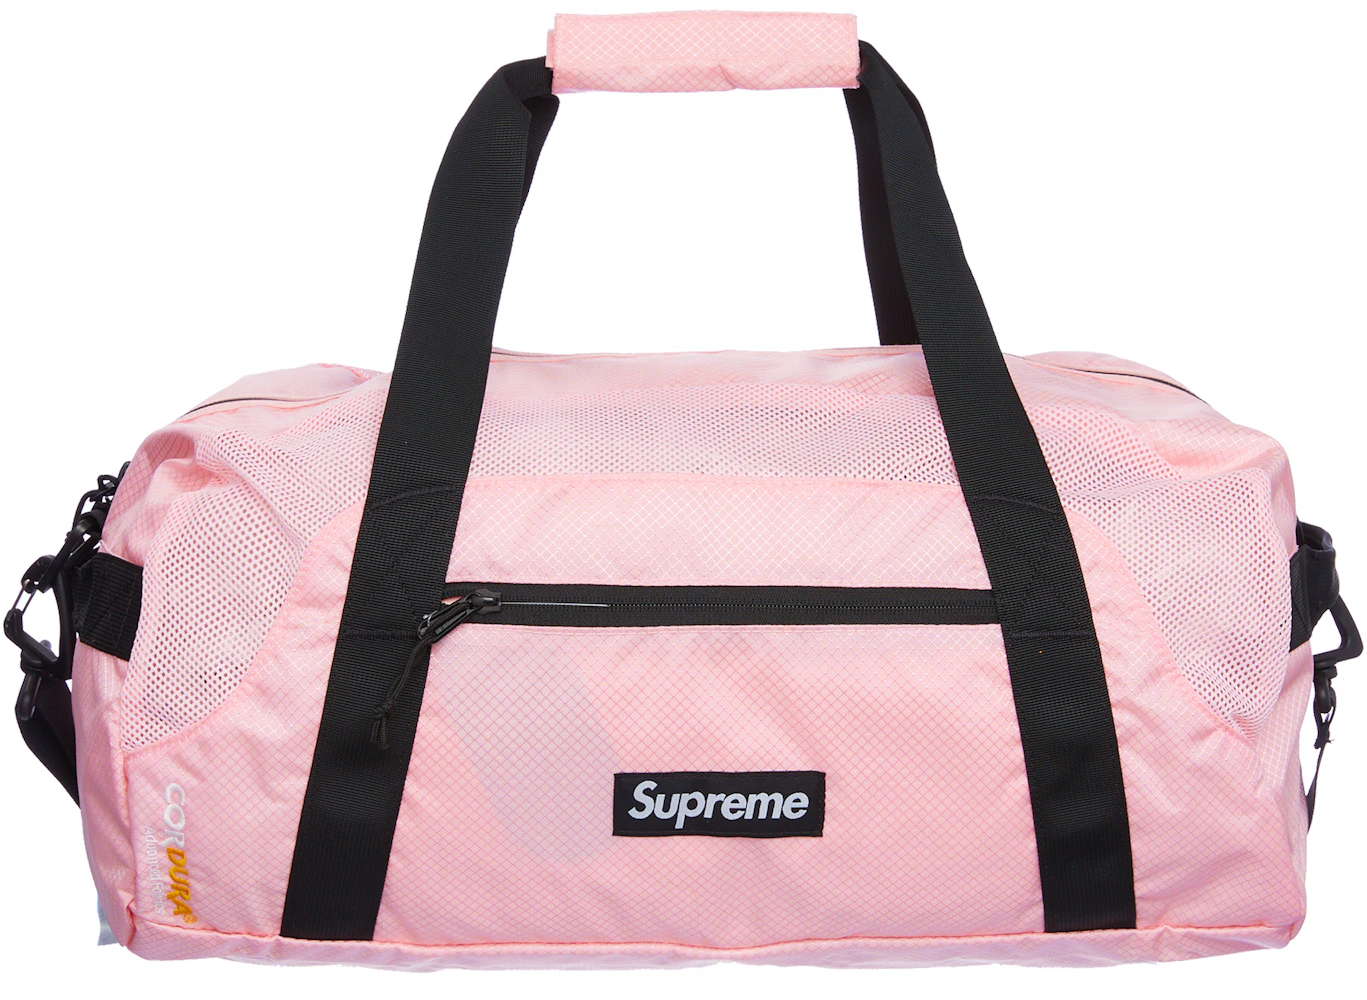 Buy Supreme Duffle Bag 'Ice' - SS19B7 ICE